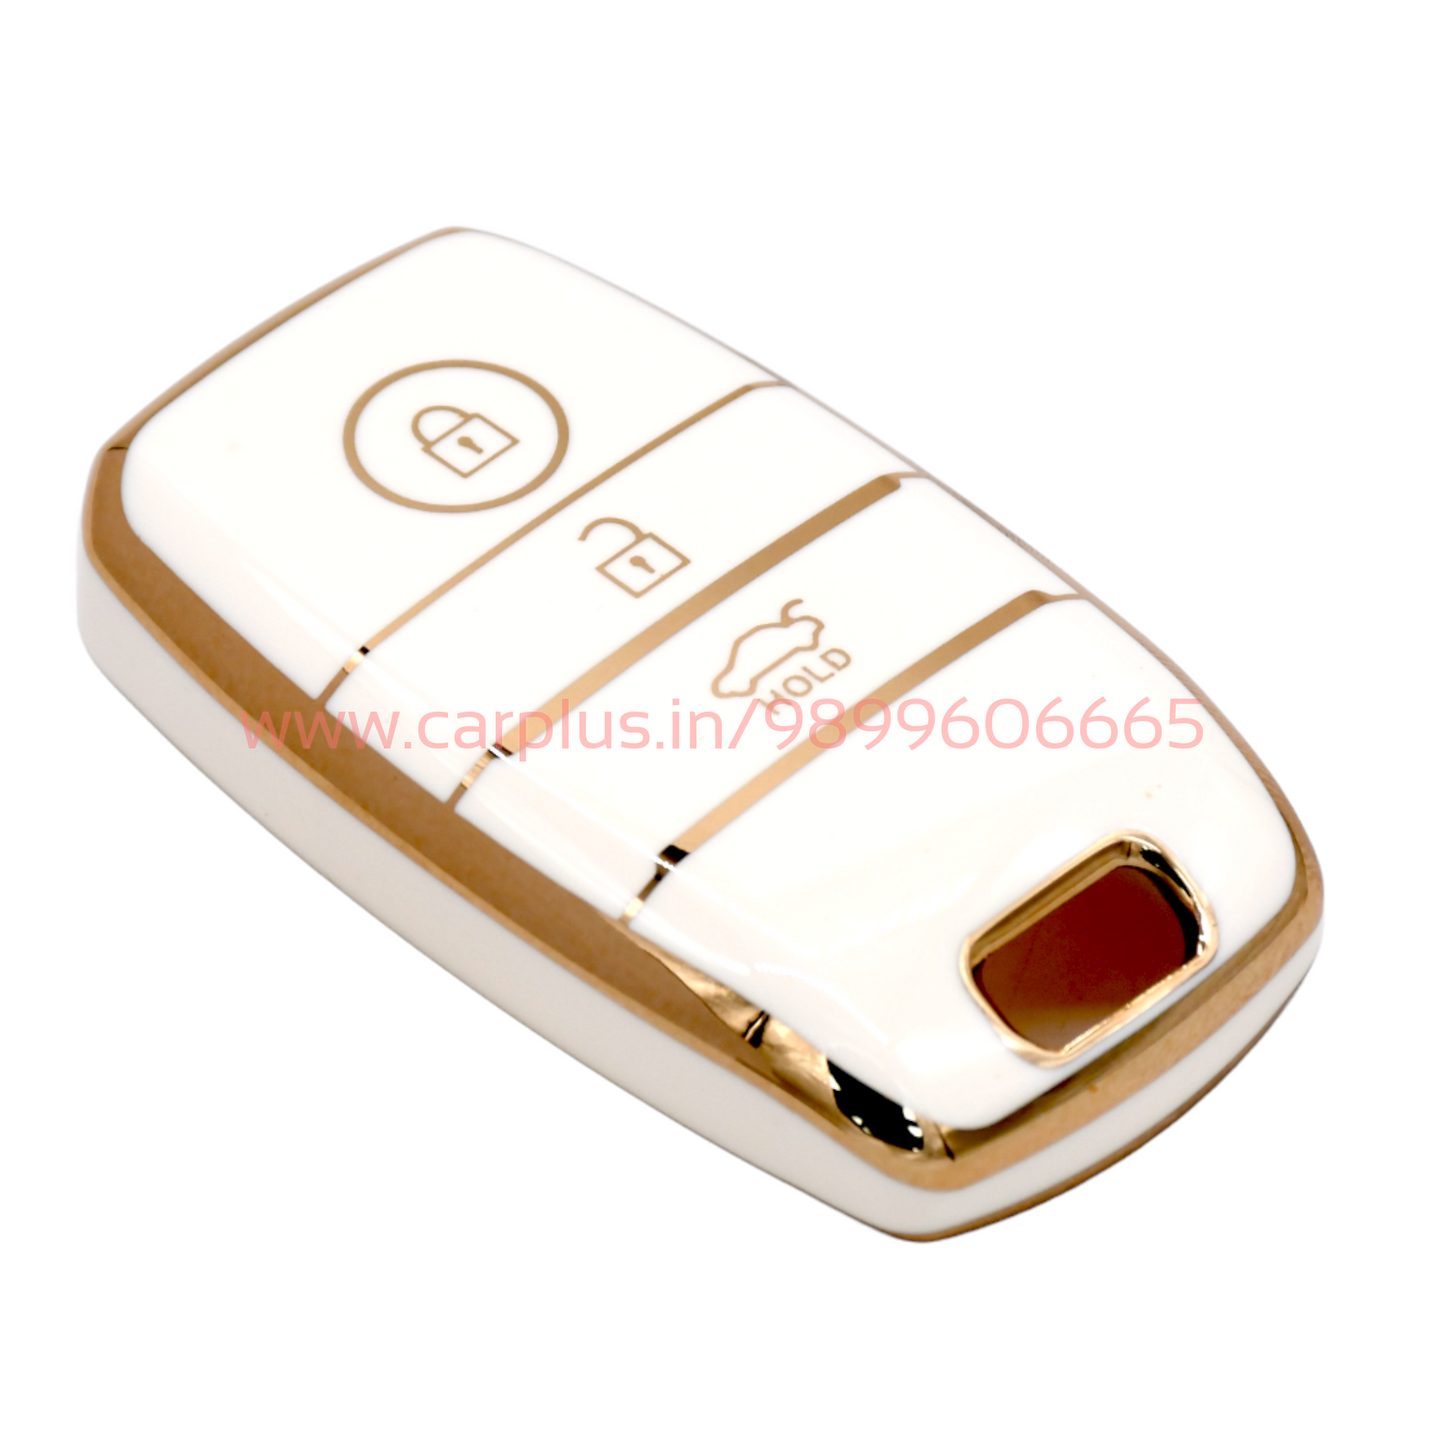 
                  
                    KMH TPU Gold Car Key Cover Compatible with Kia Seltos Sonet Carens 3 Button Push Start Car Key-TPU GOLD KEY COVER-KMH-KEY COVER-White-CARPLUS
                  
                